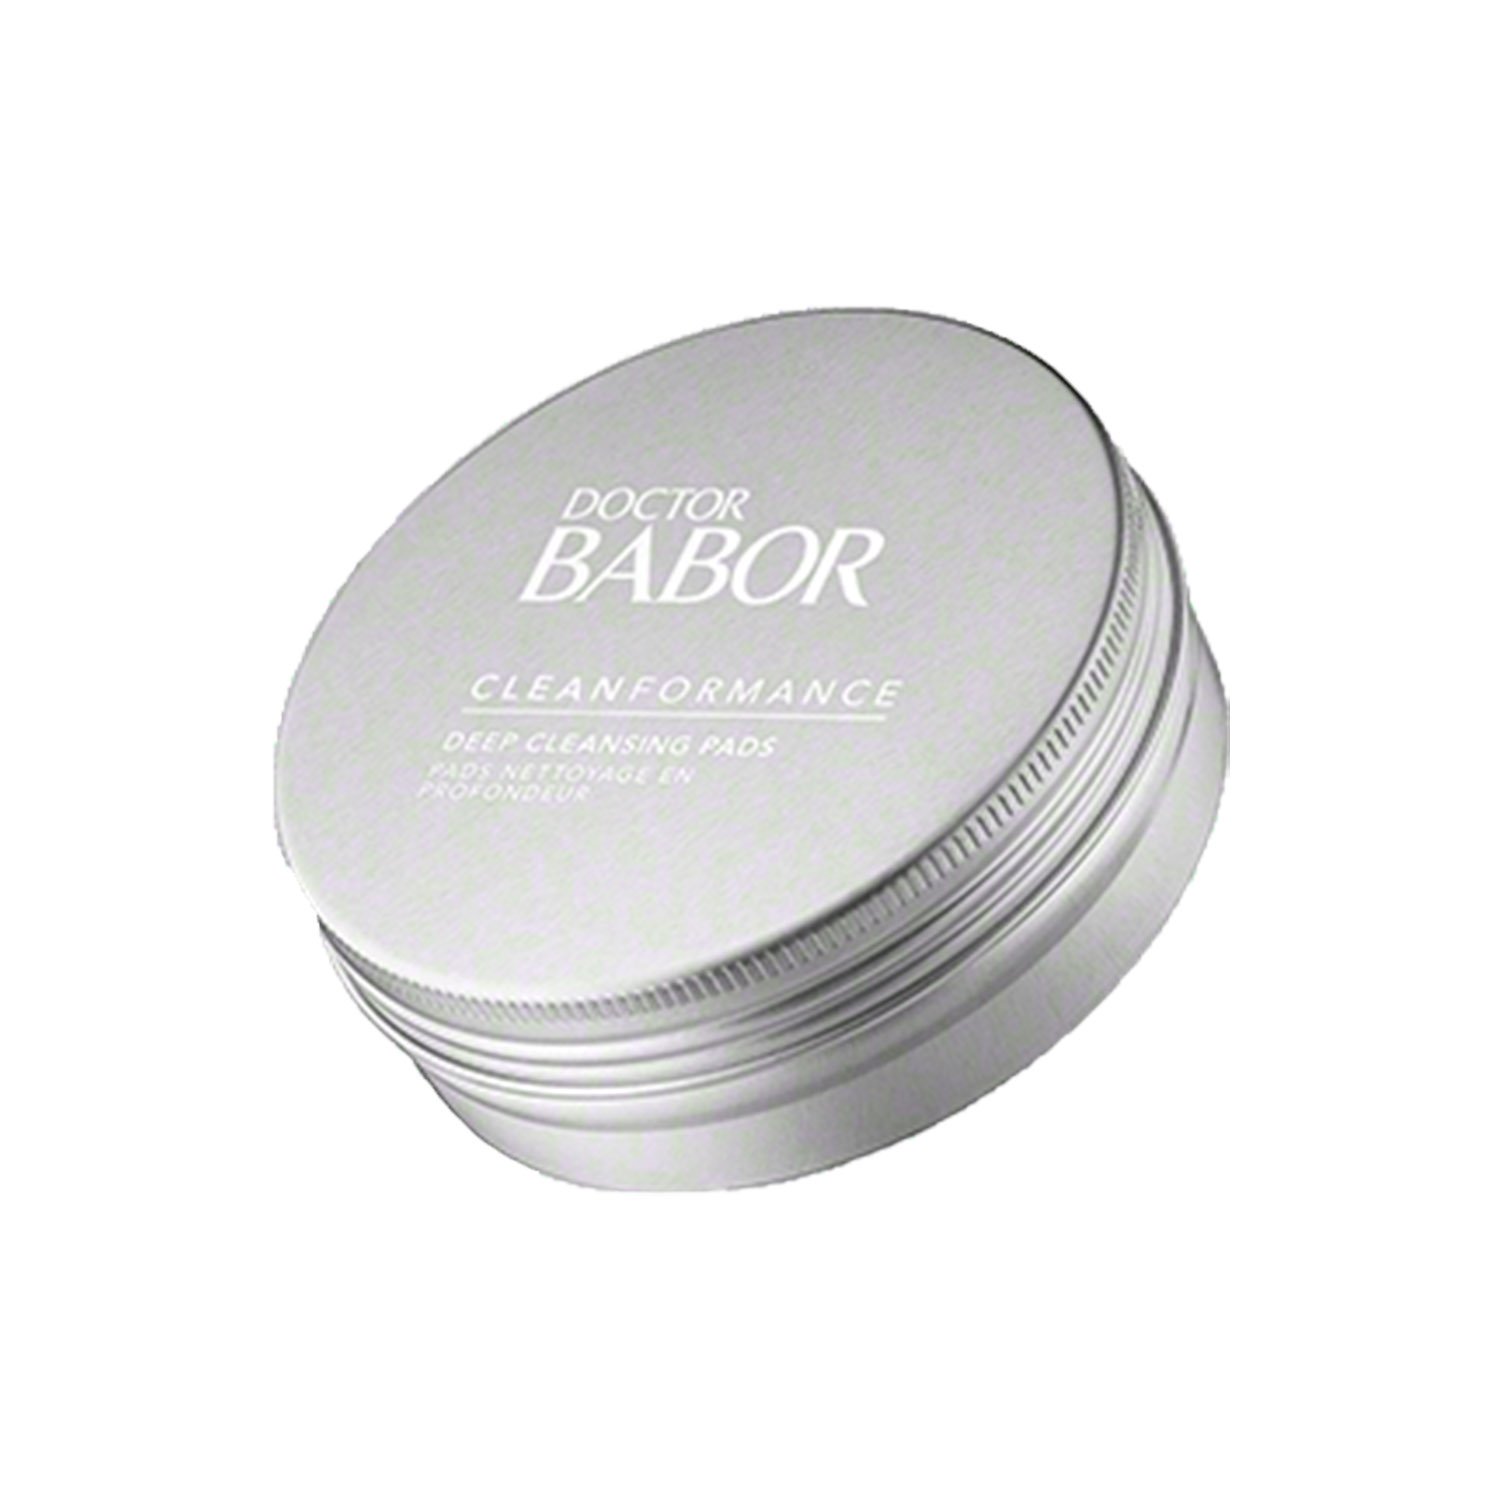 Пади для глибокого очищення шкіри Babor Doctor Babor Clean Formance Deep Cleansing Pads, 20 шт. - фото 3